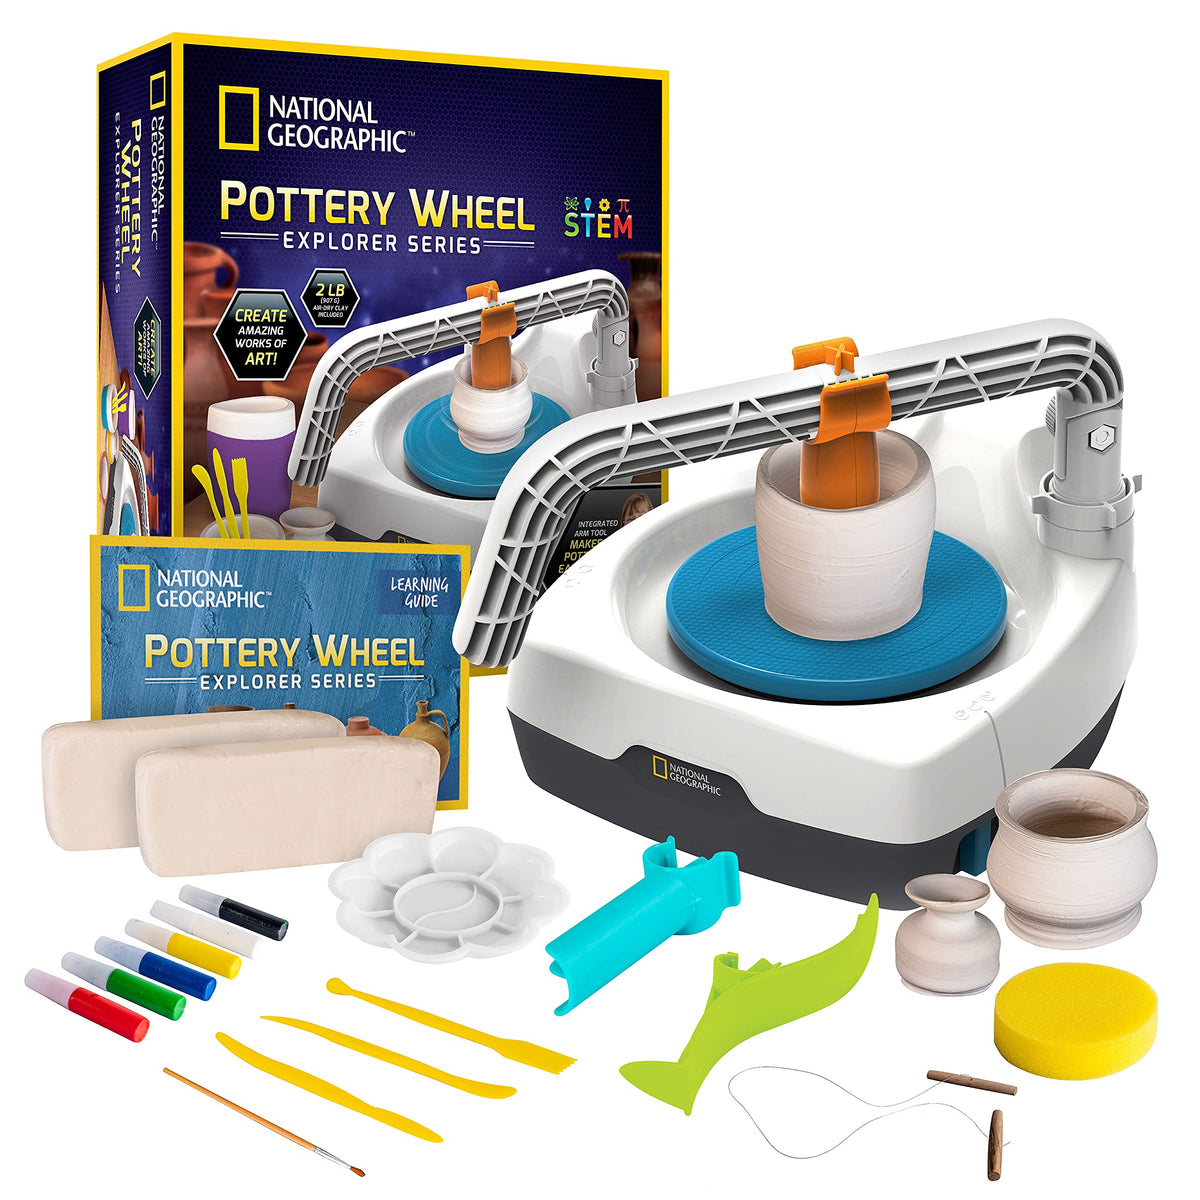 Pottery wheel for Kids (2020)  Cheap pottery Wheel Kit I Kids Pottery  Wheel 